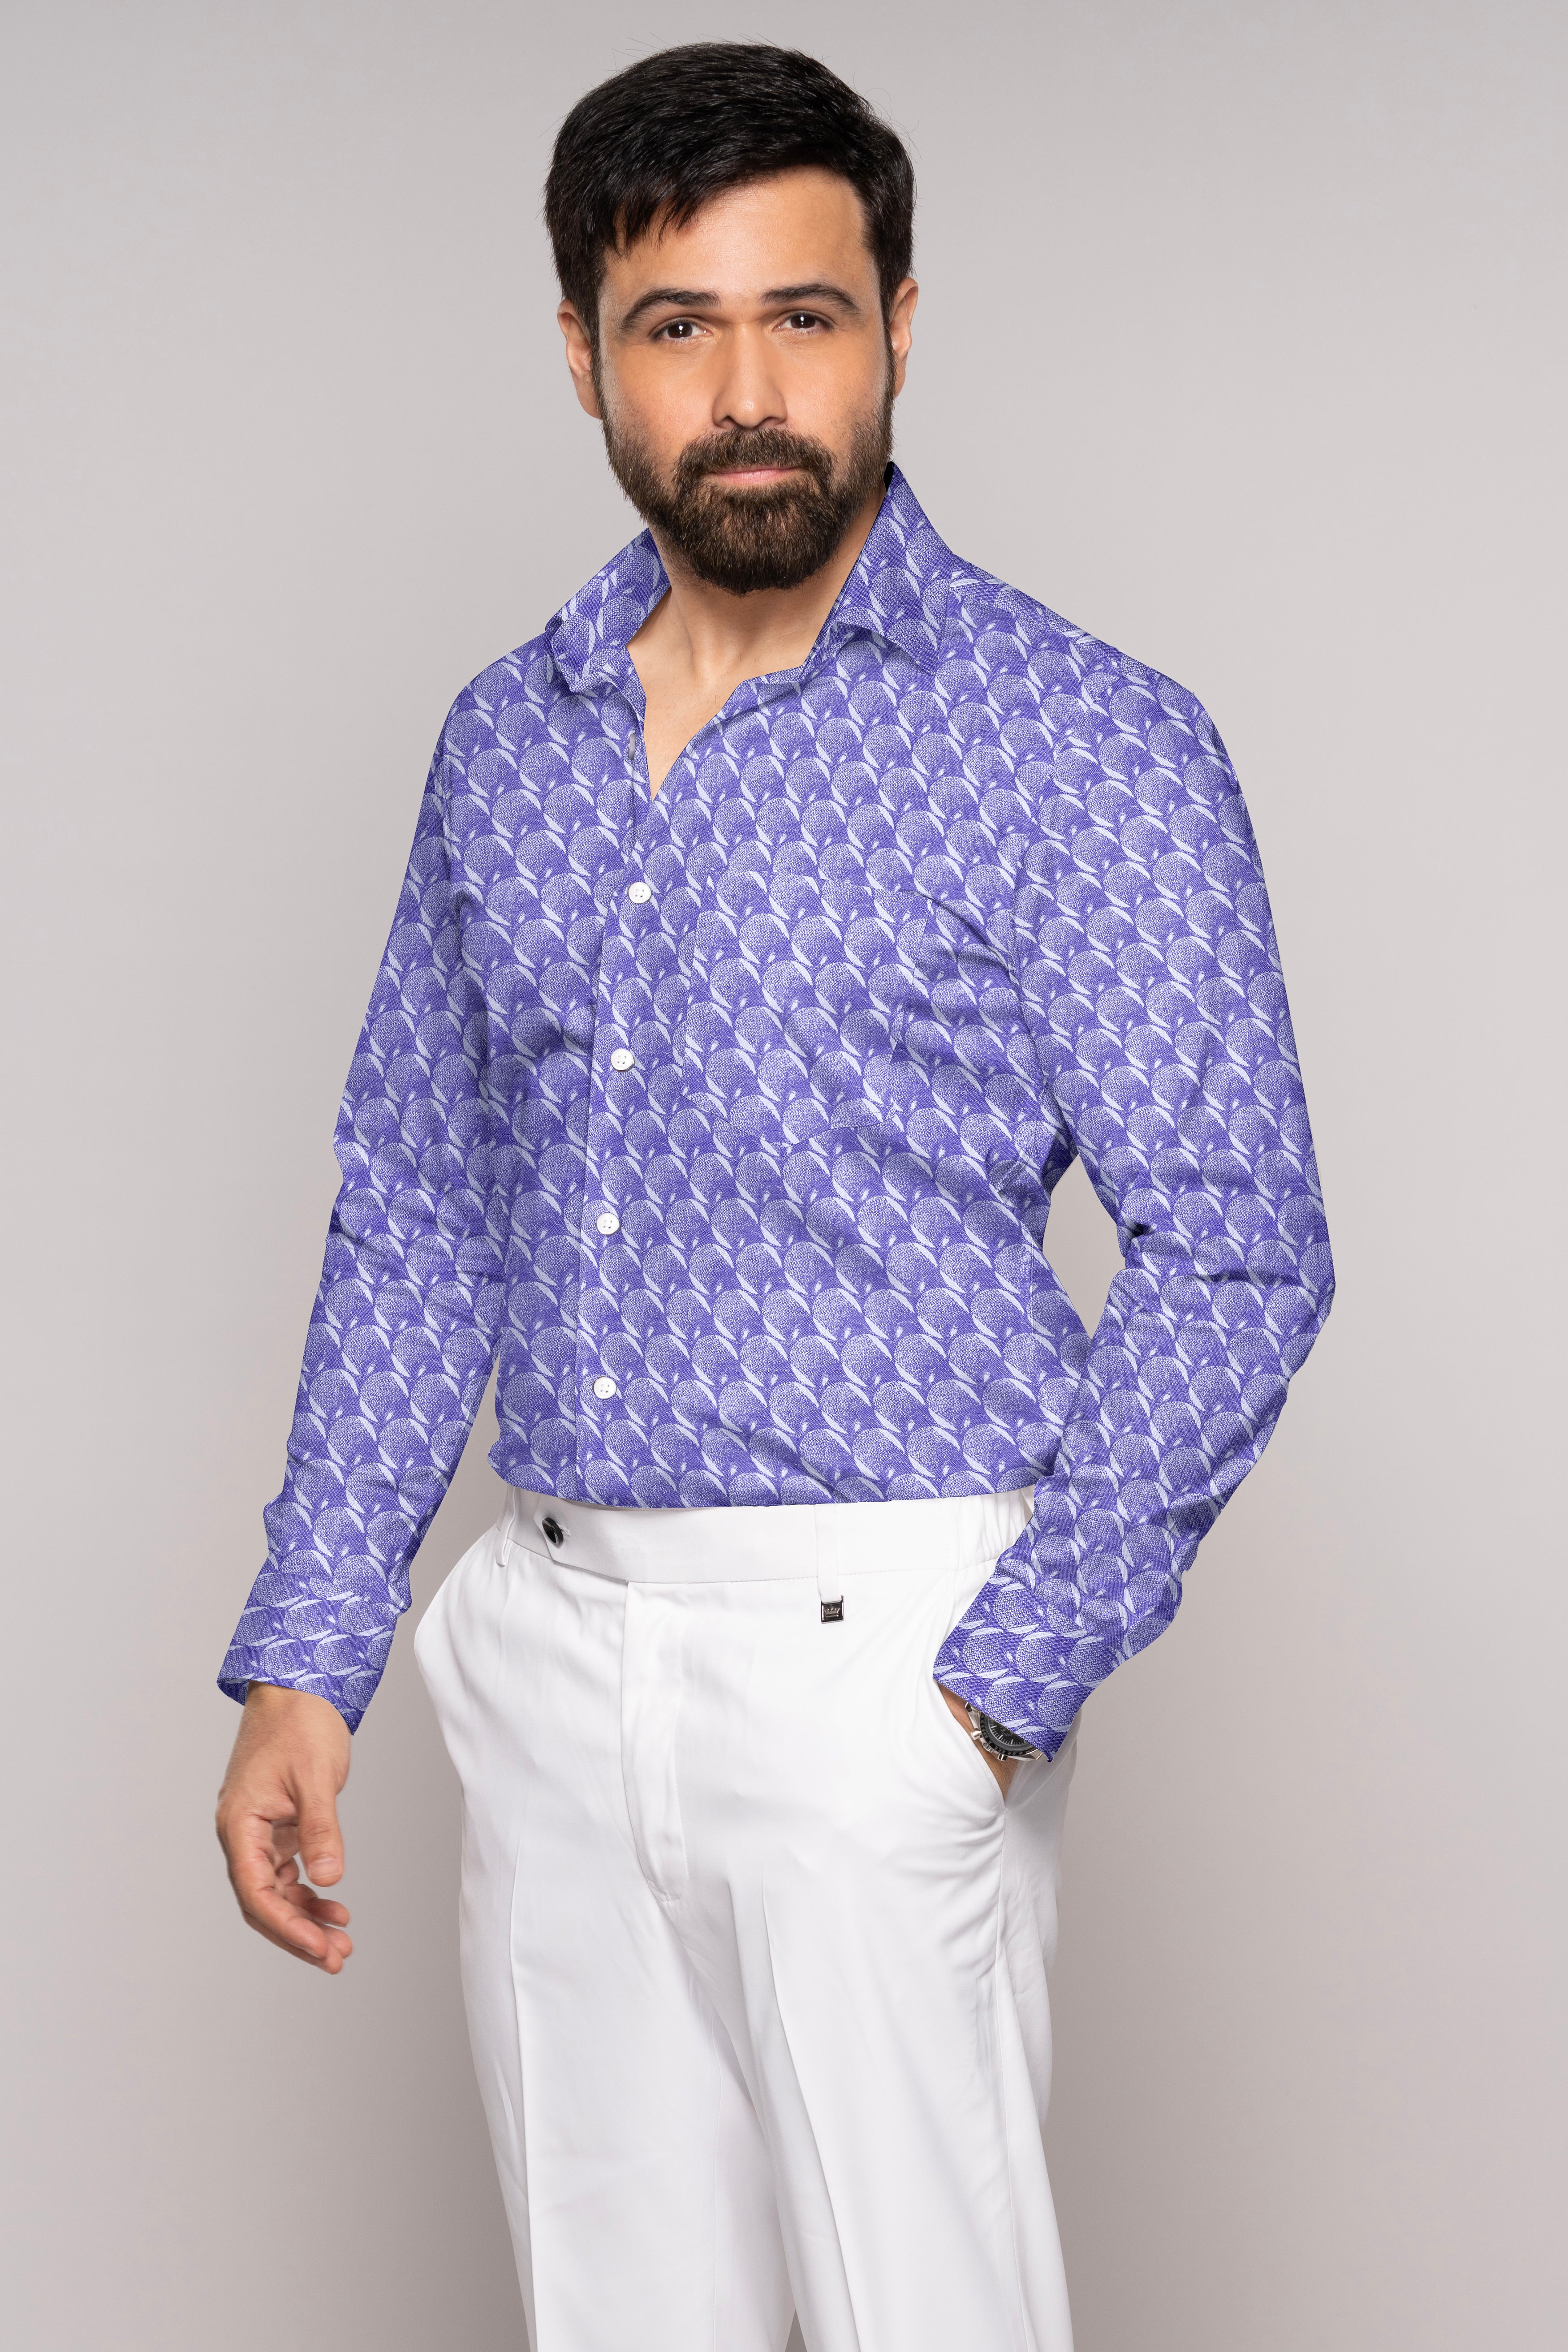 Iris Blue and White Jacquard Textured Premium Giza Cotton Shirt